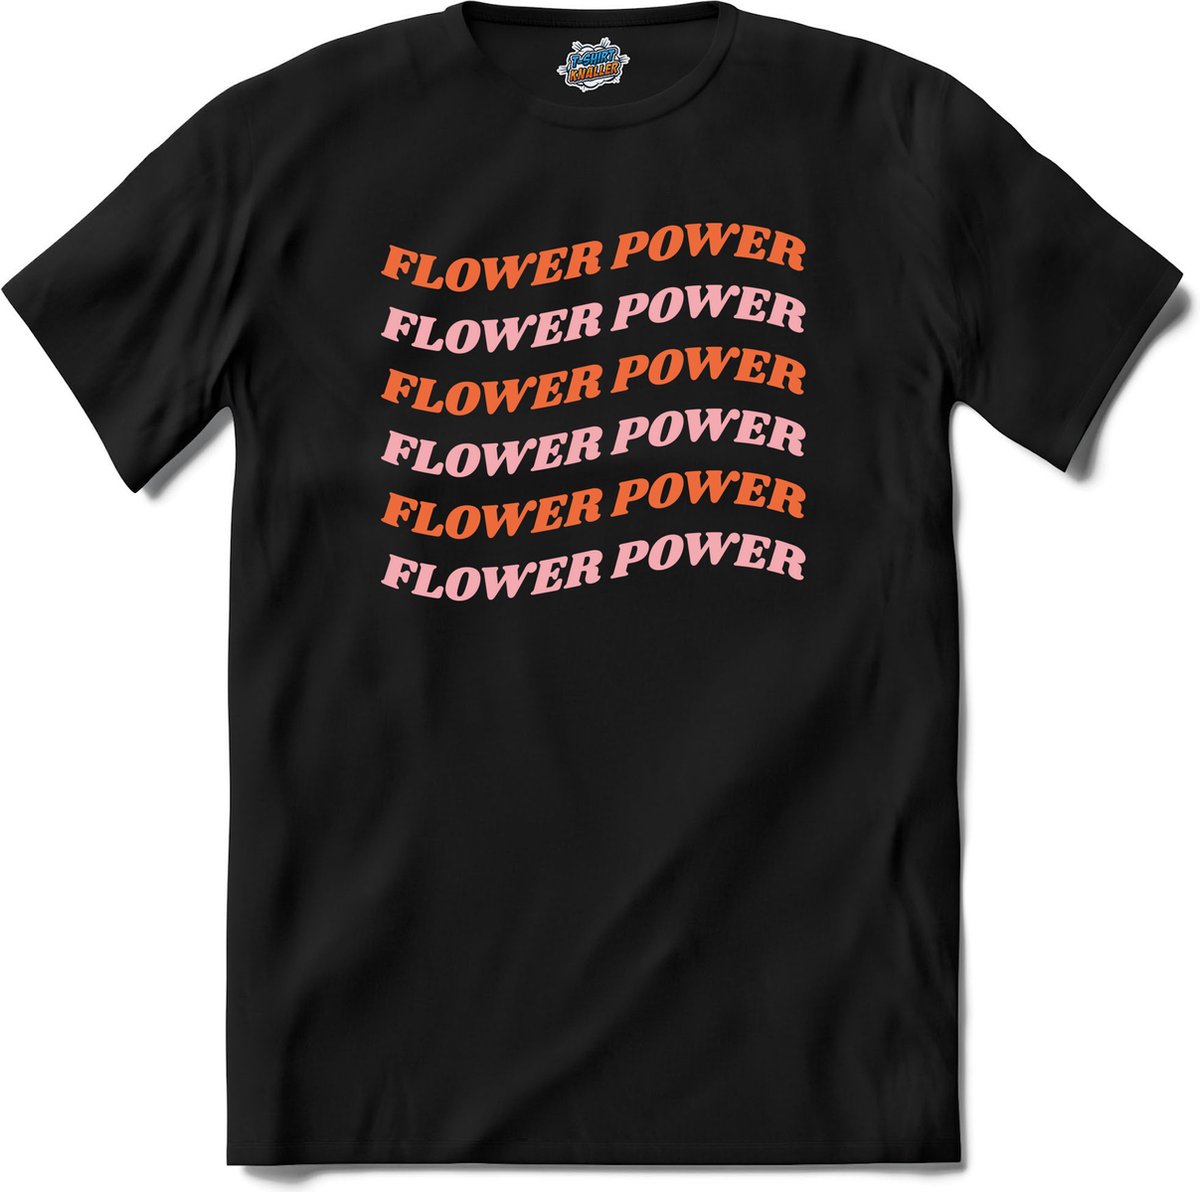 Flower power - T-Shirt - Meisjes - Zwart - Maat 2 jaar